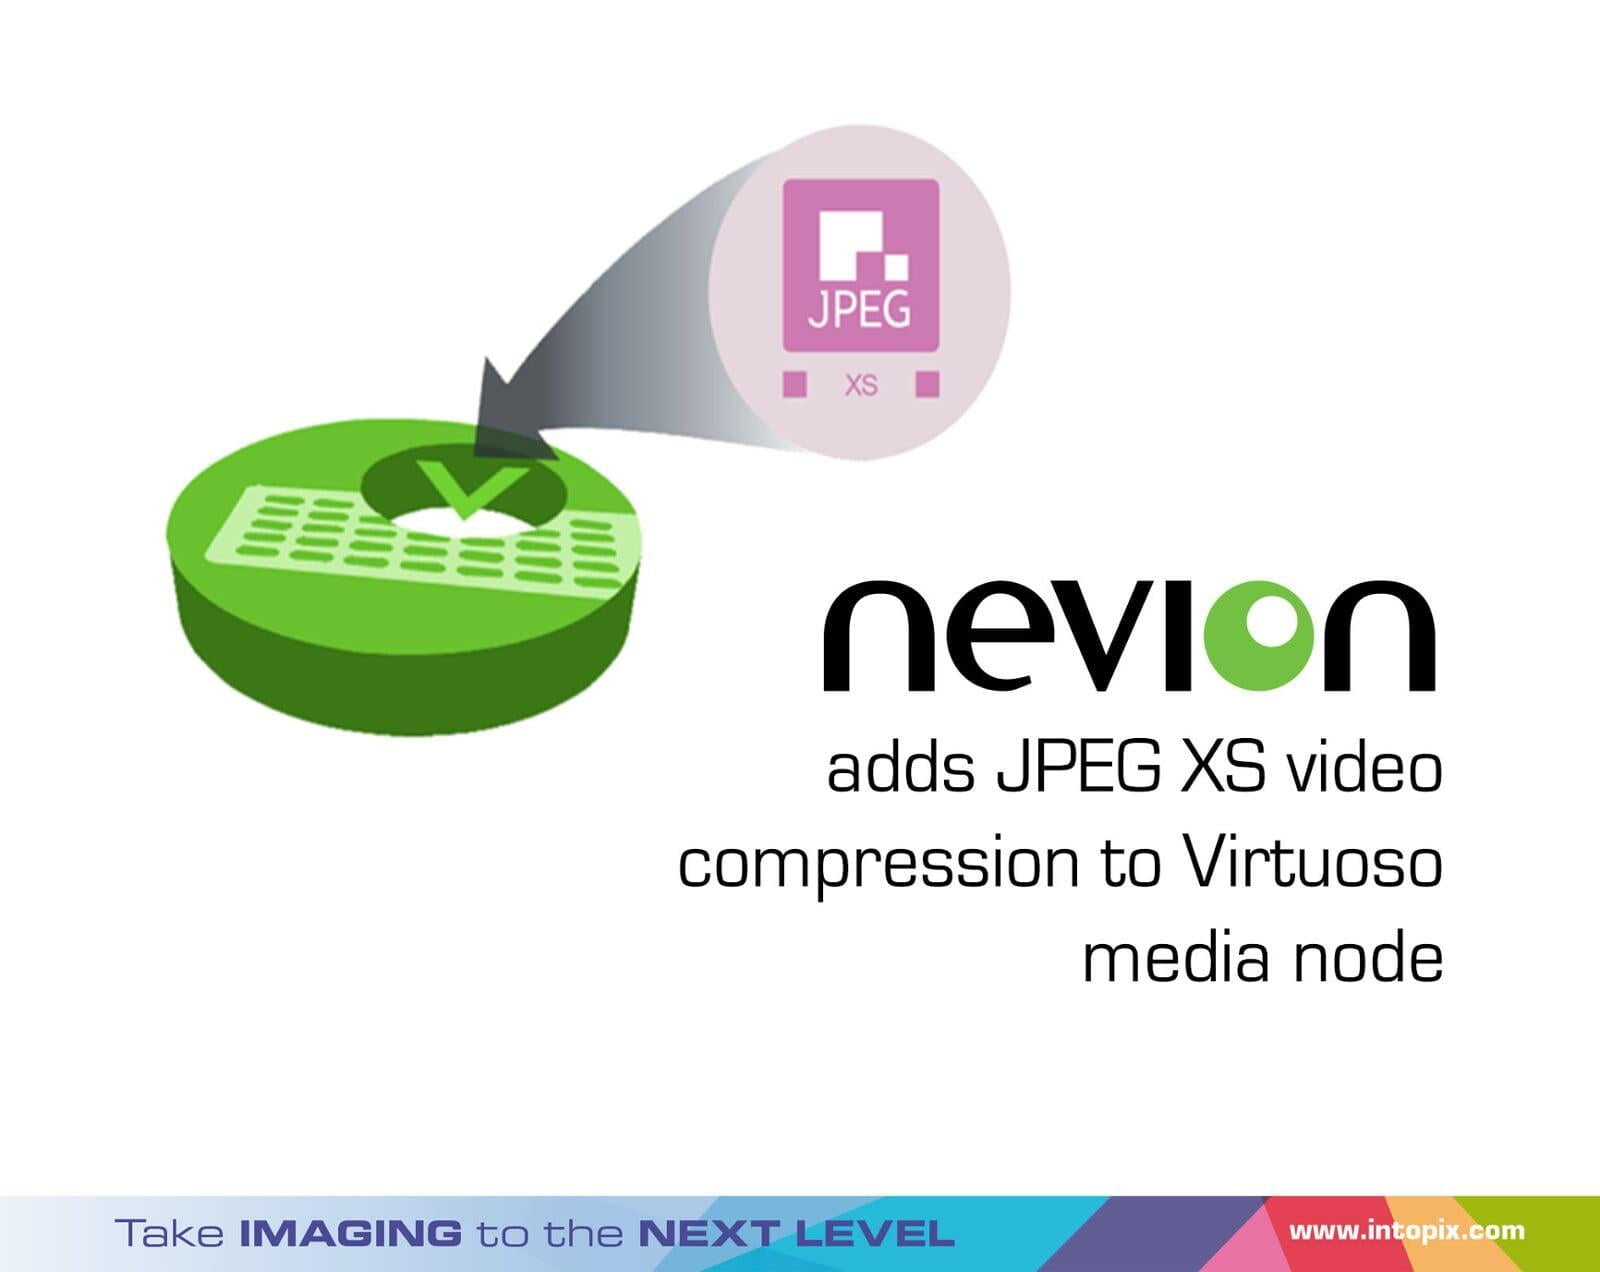 Nevion, Virtuoso 미디어 노드에 JPEG XS 비디오 압축 기능 추가